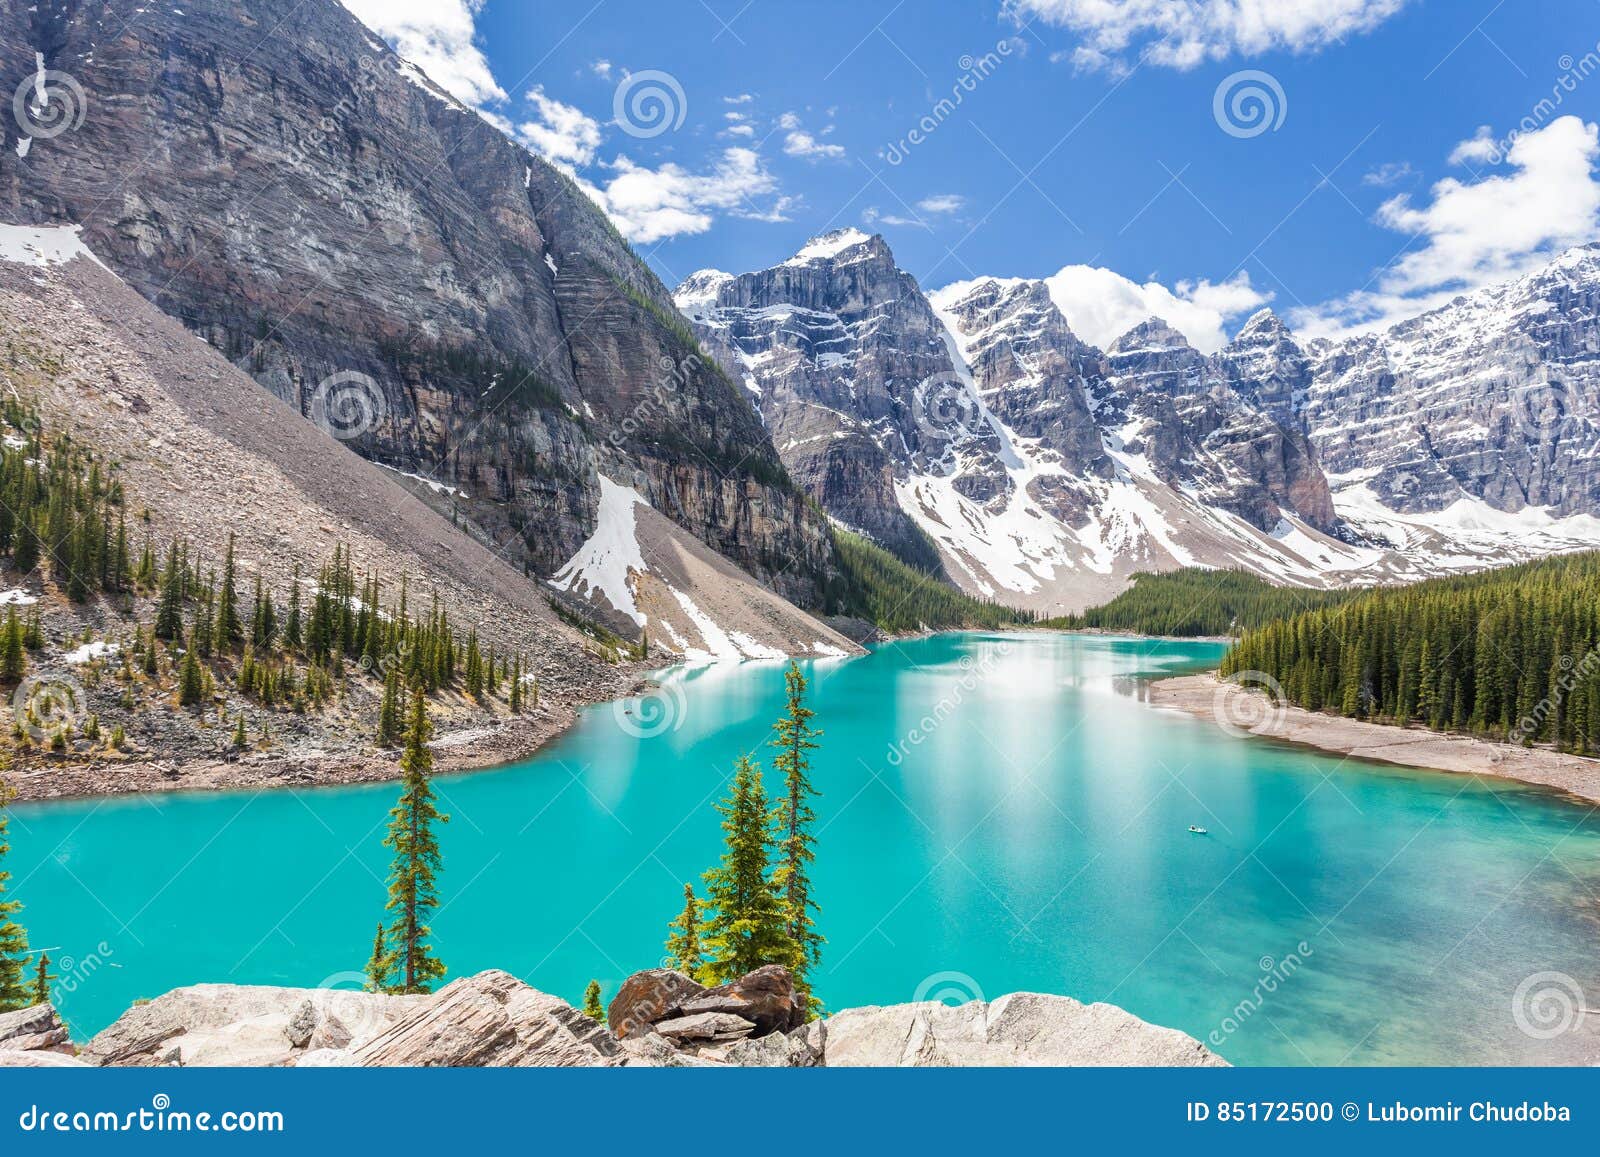 moraine lake in banff national park, canadian rockies, canada.